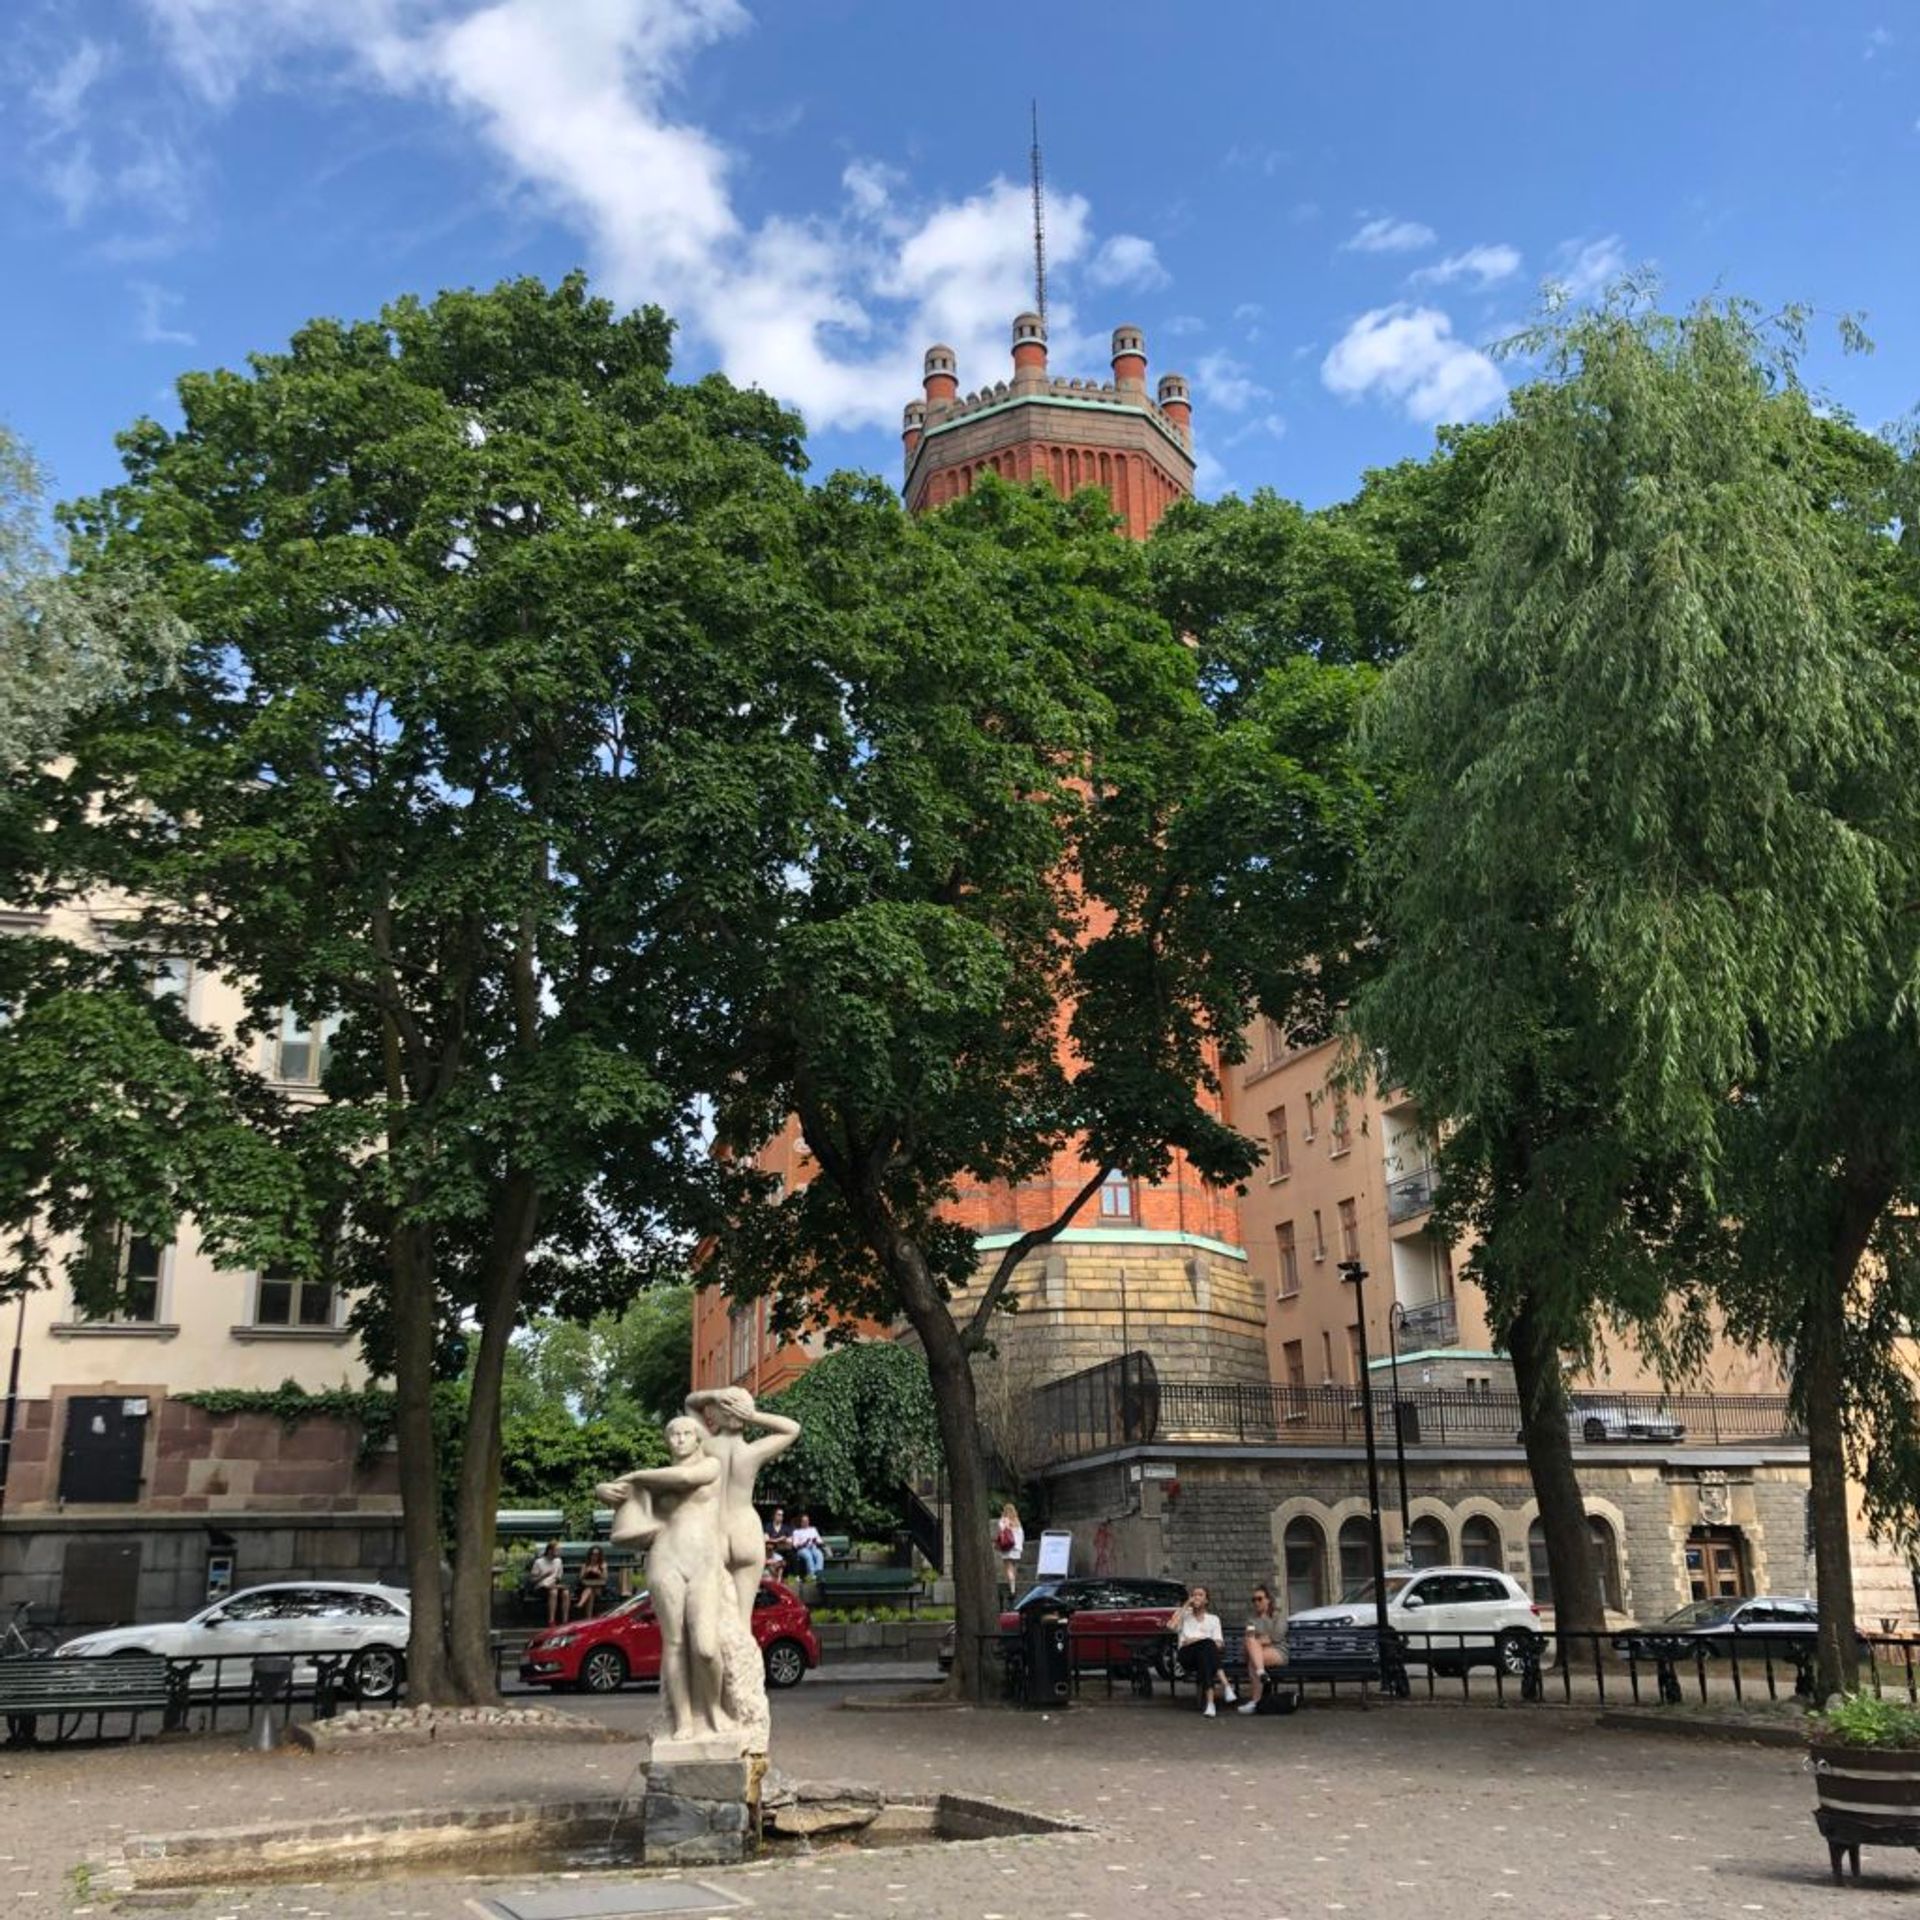 Statues and trees near Södrateatern, Stockholm June 2019